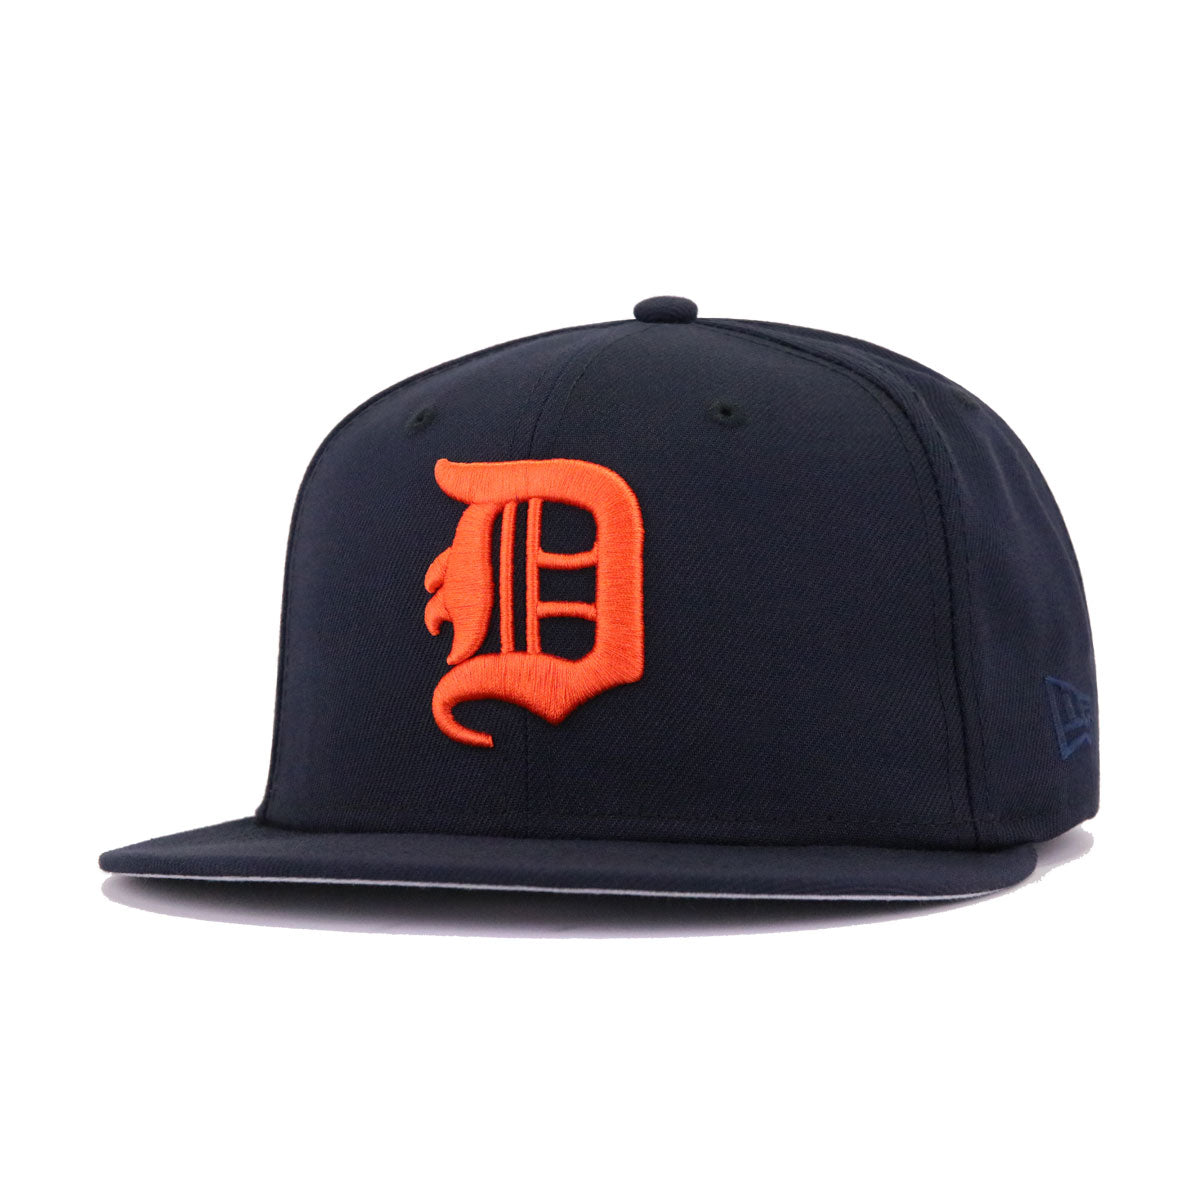 New Era Detroit Tigers Old English D Baseball Fitted Hat Cap Blue Orange 7 5/8